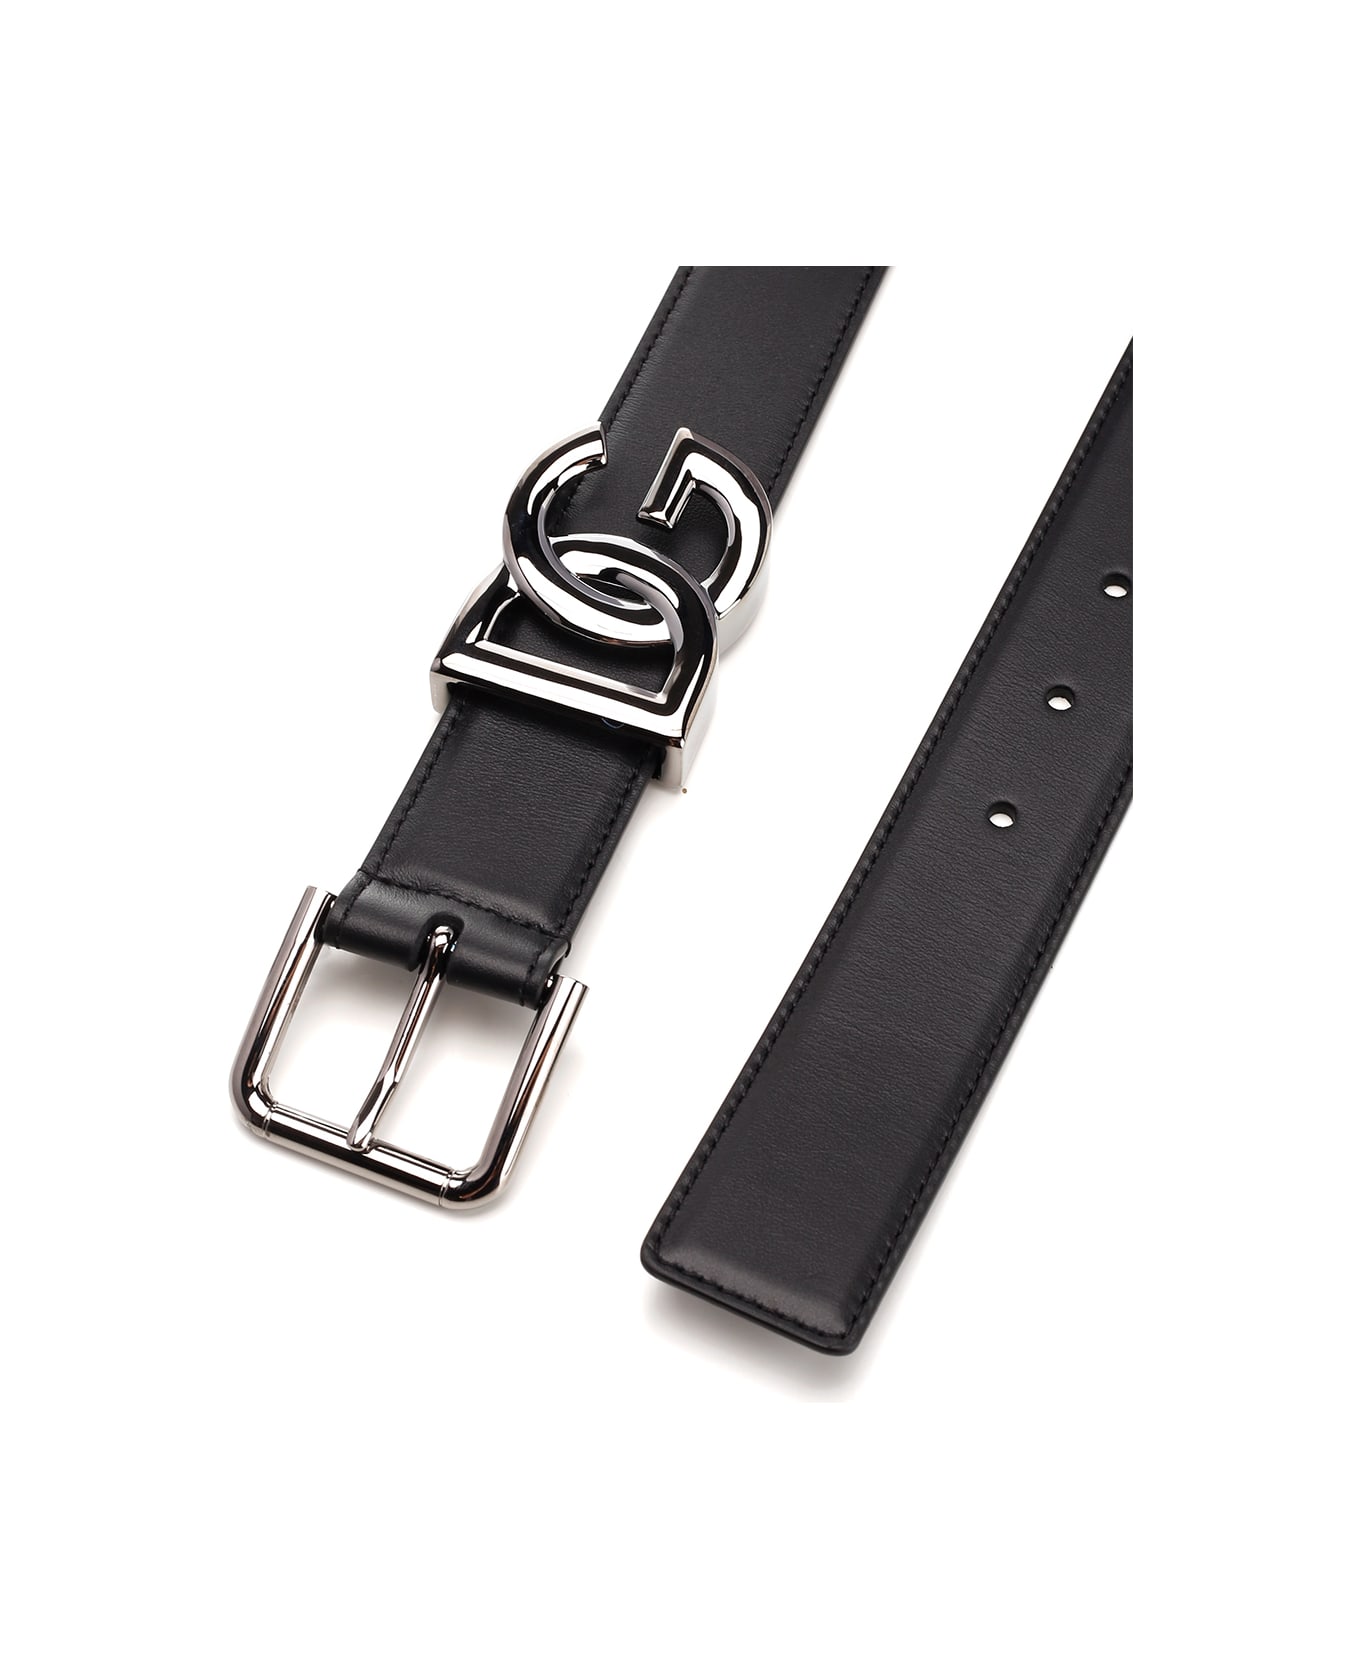 Dolce & Gabbana Dg Buckle Belt - Black